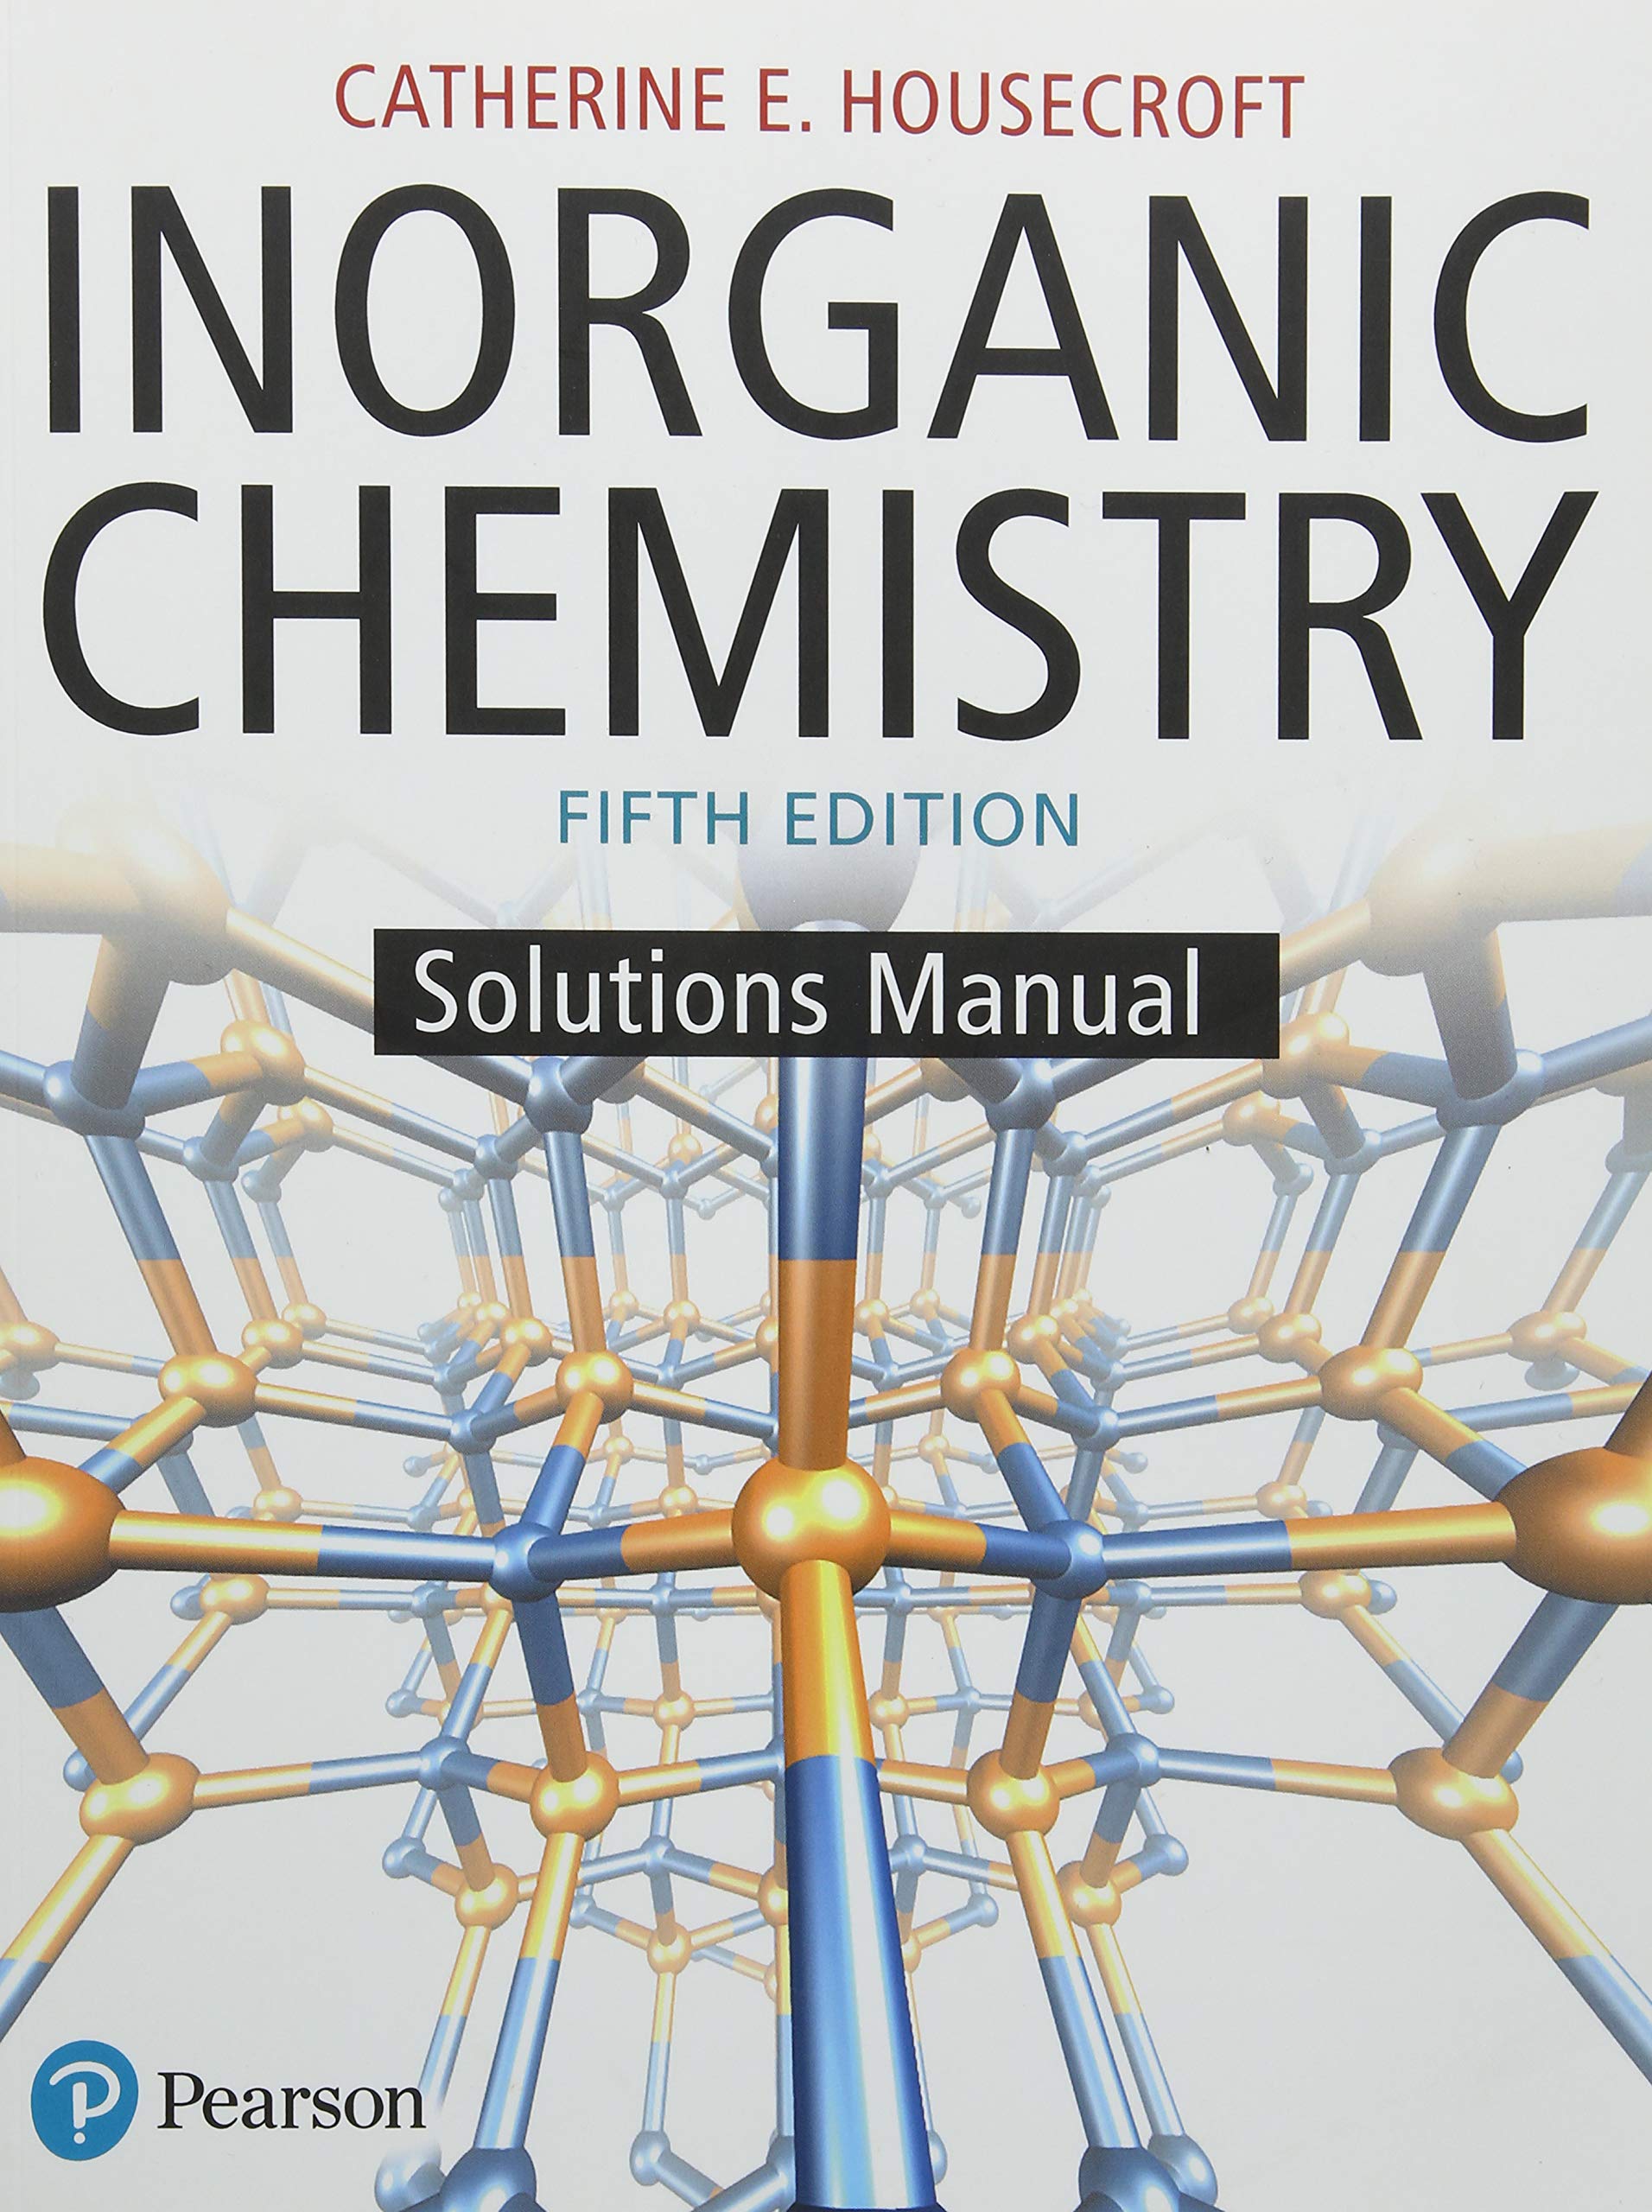 Inorganic chemistry : solutions manual 